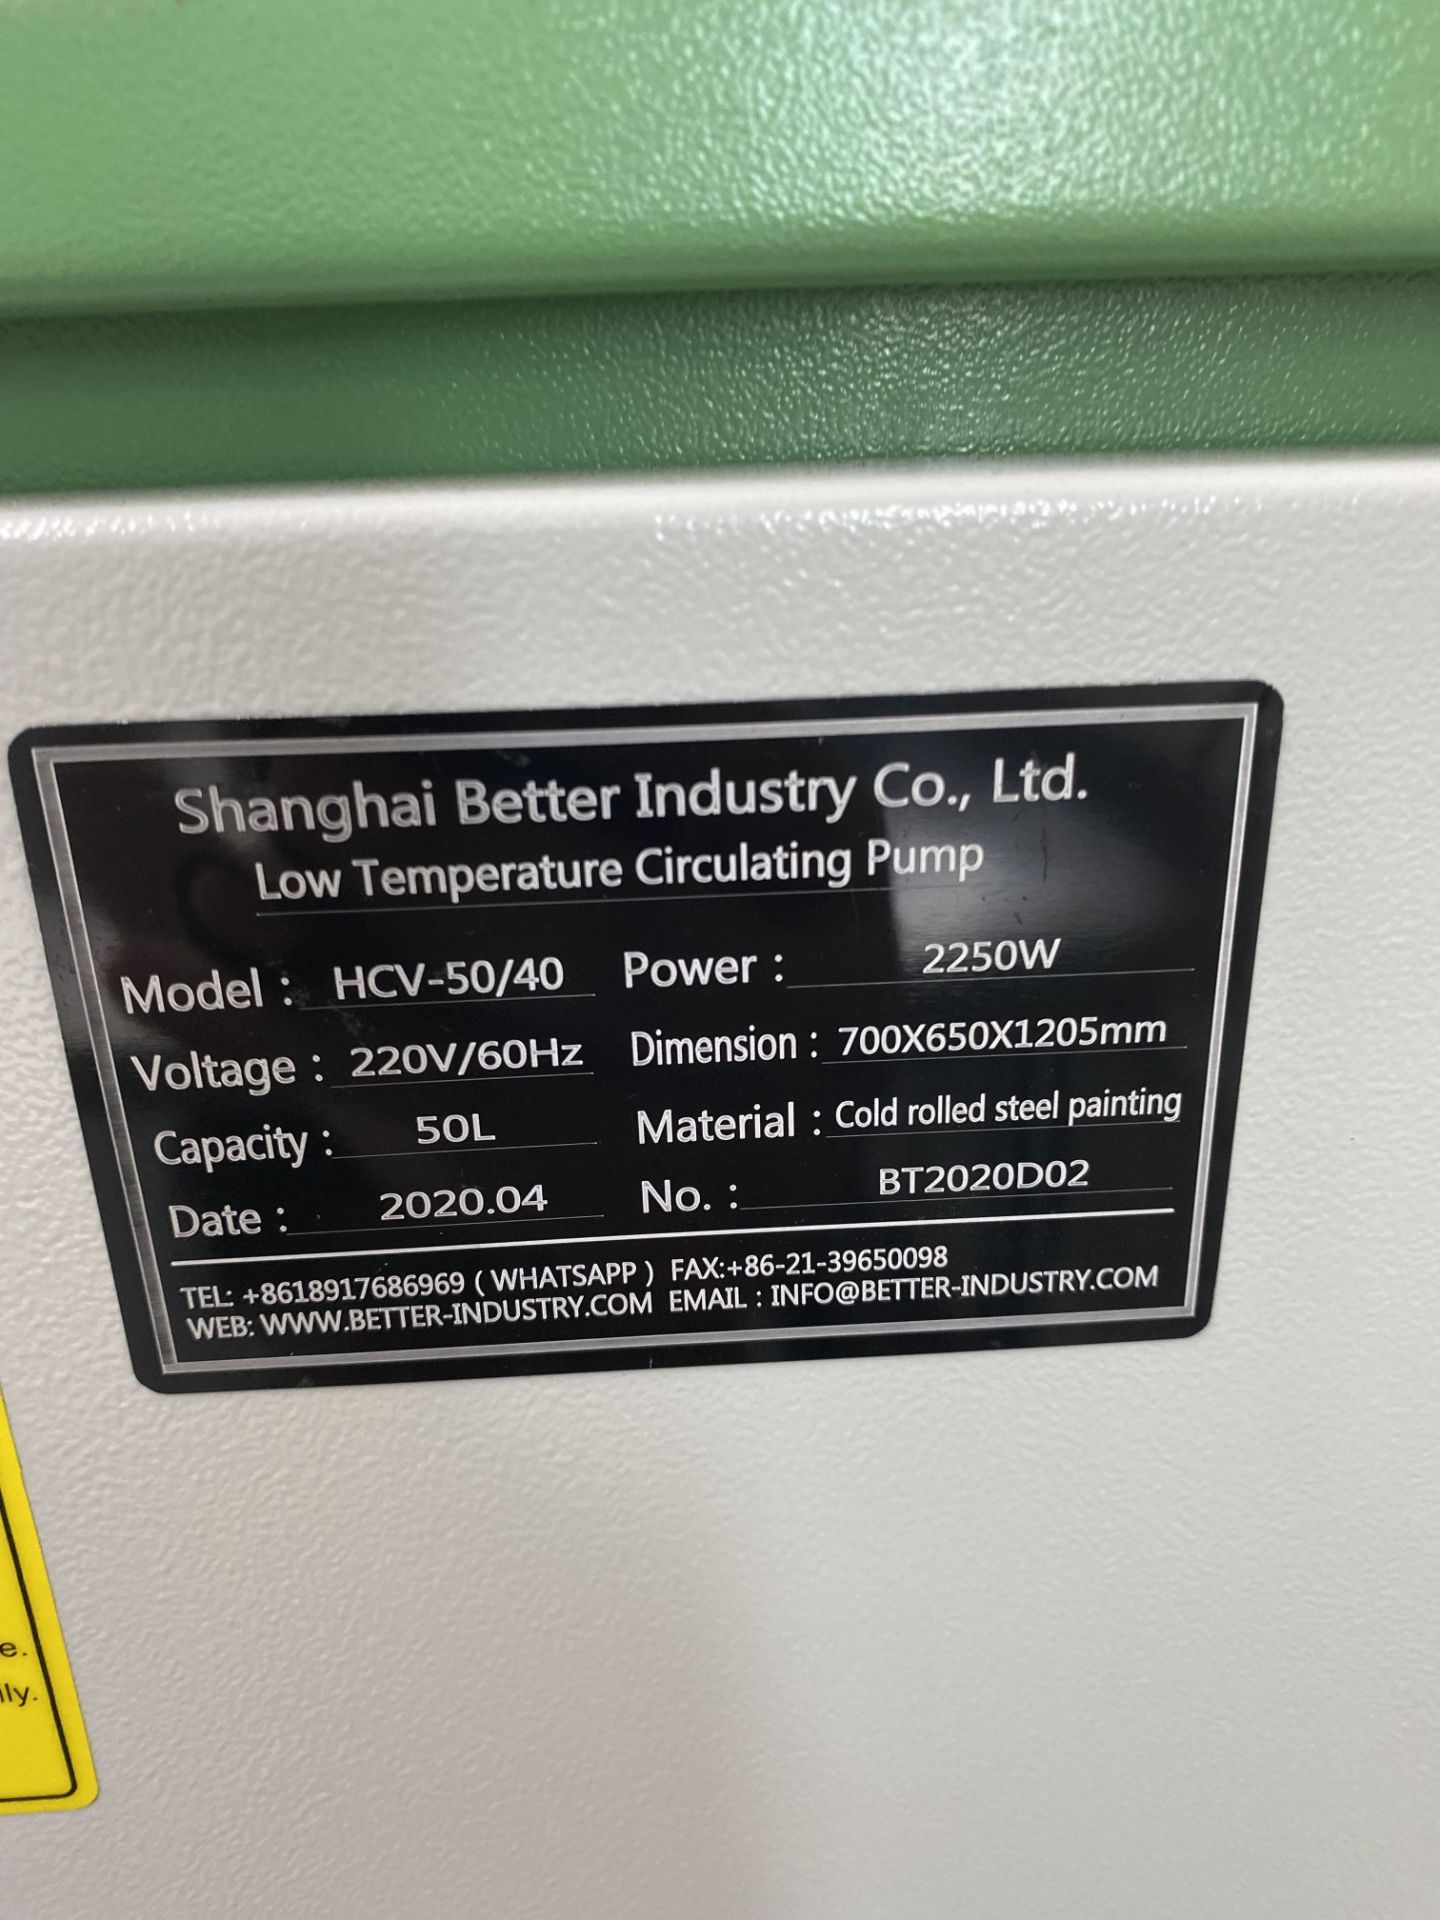 Used Shanghai Better Industry Co. Ltd Low Temperature Circulating Pump/Chiller. Model HCV-50/40. - Image 2 of 3